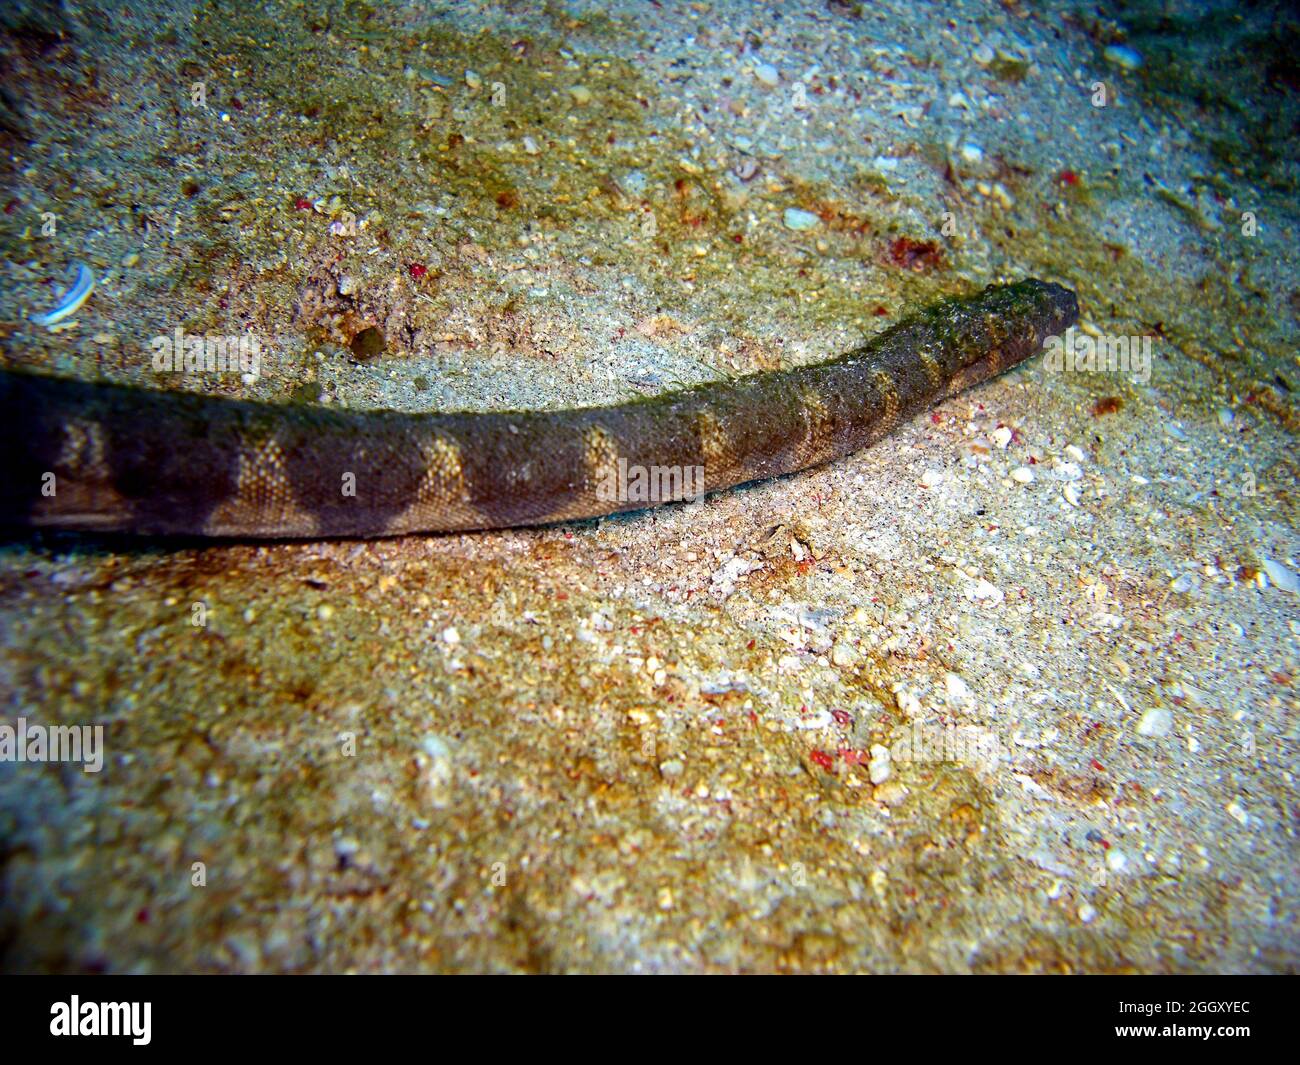 Sea snake on the ground in the filipino sea 15.2.2012 Stock Photo